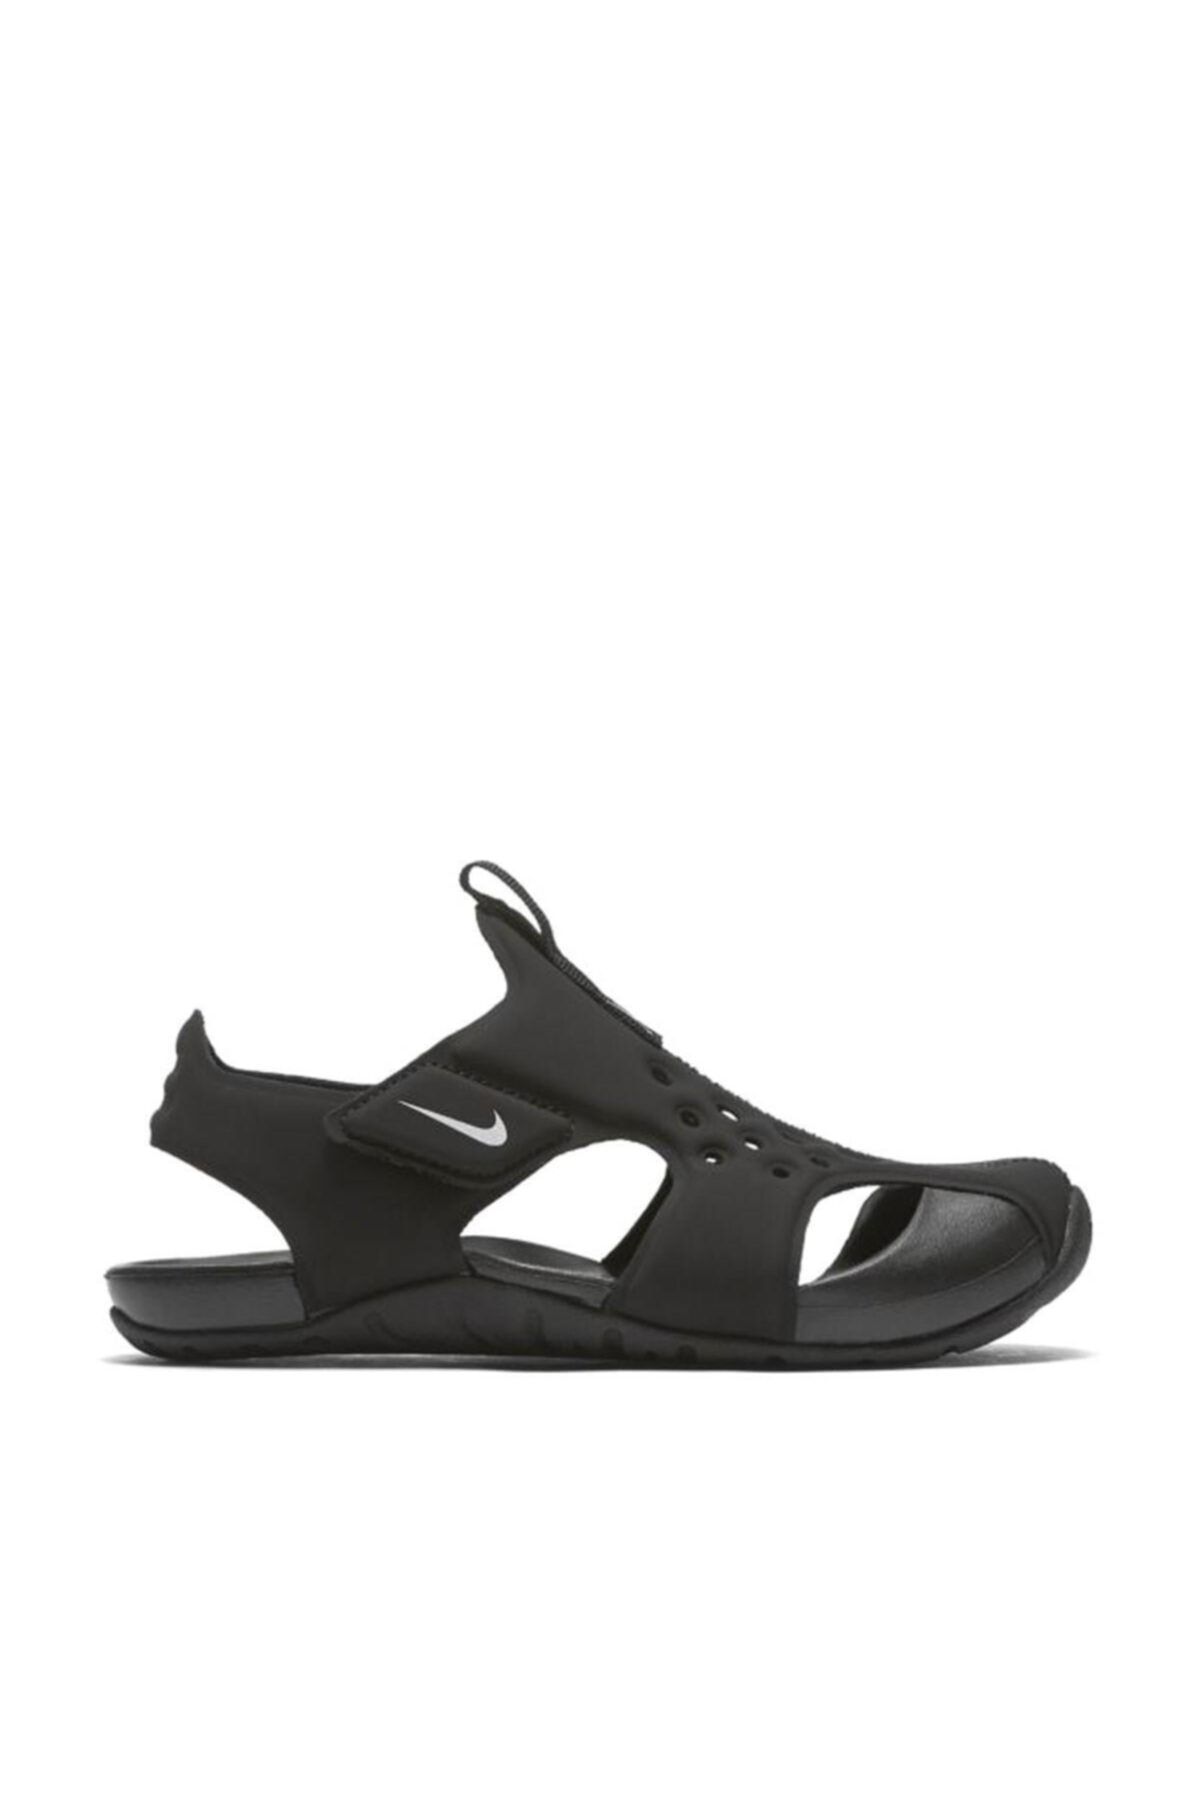 Nike Sunray Protect 2 943826-001 Çocuk Sandalet